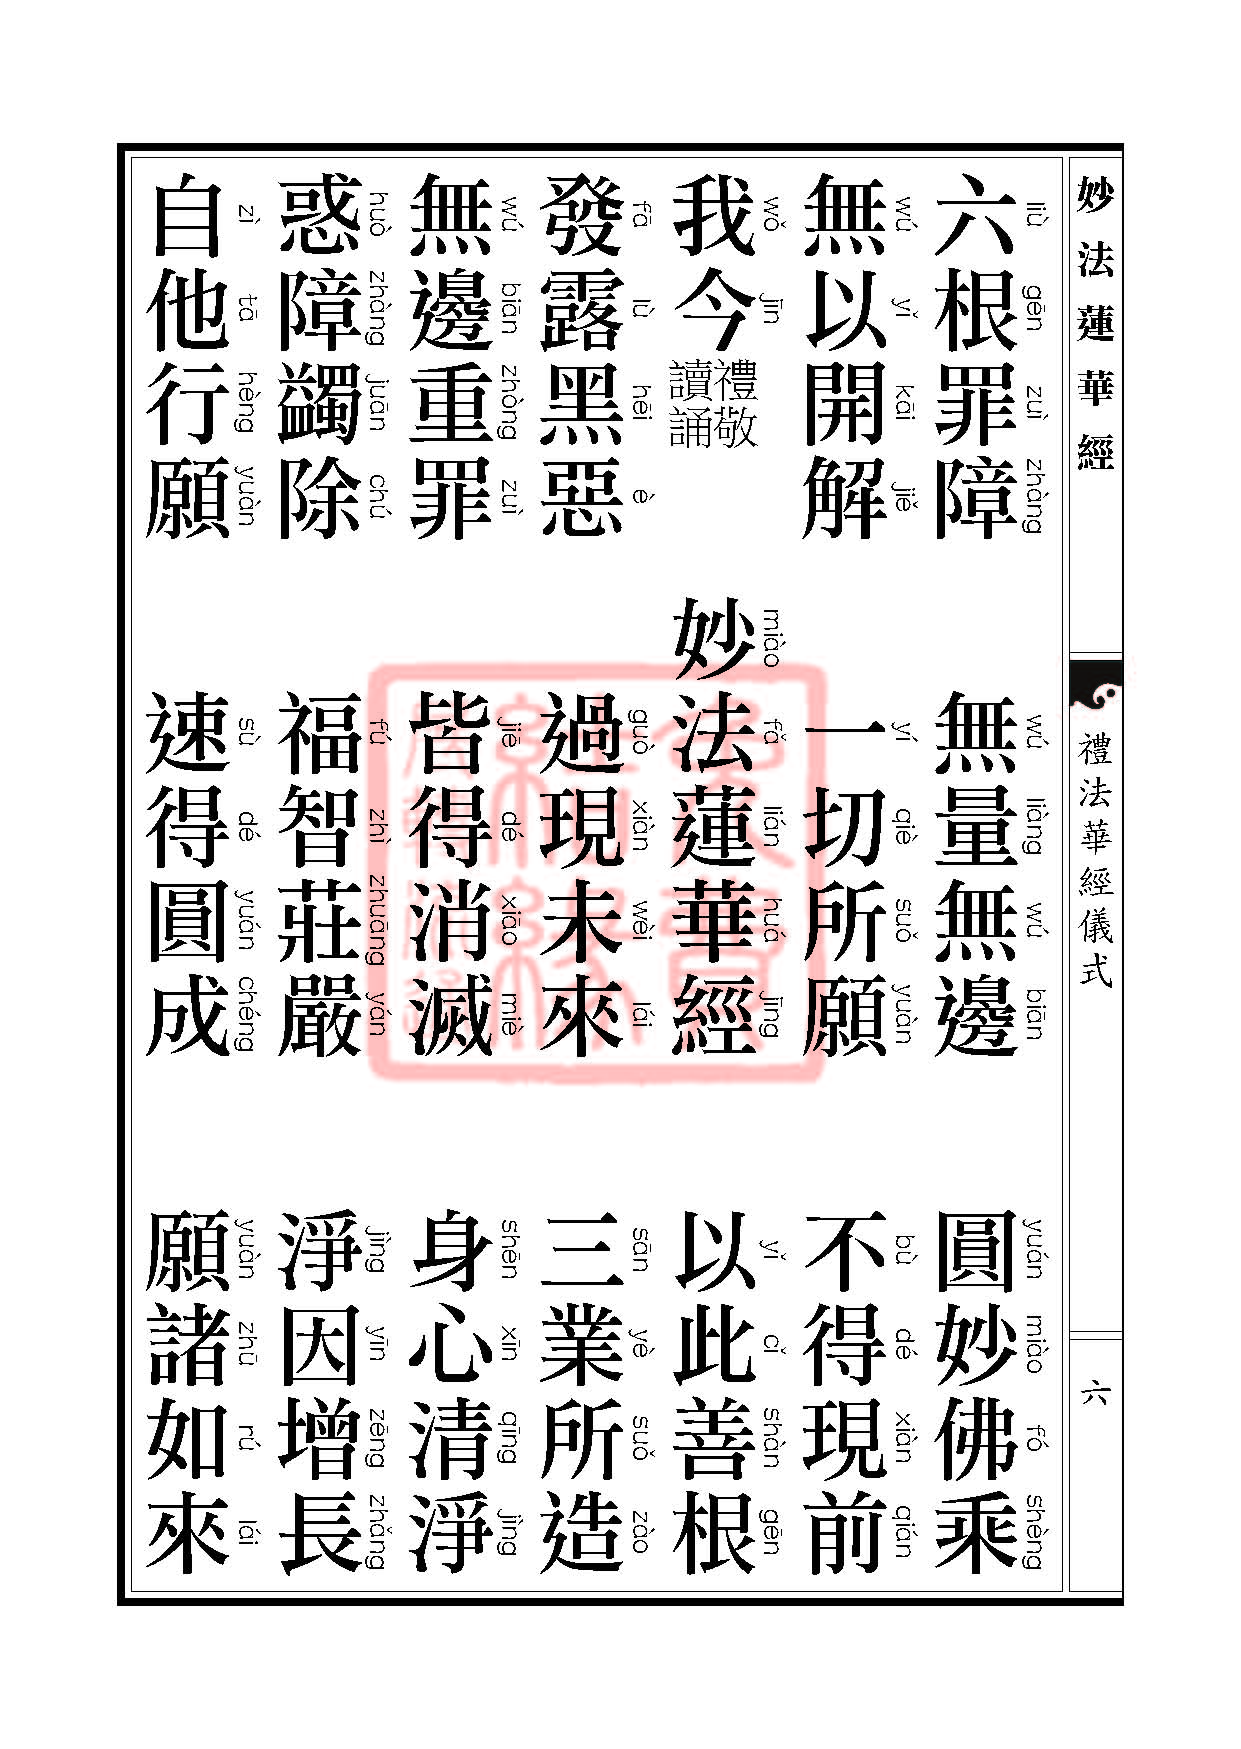 Book_FHJ_HK-A6-PY_Web_ҳ_006.jpg